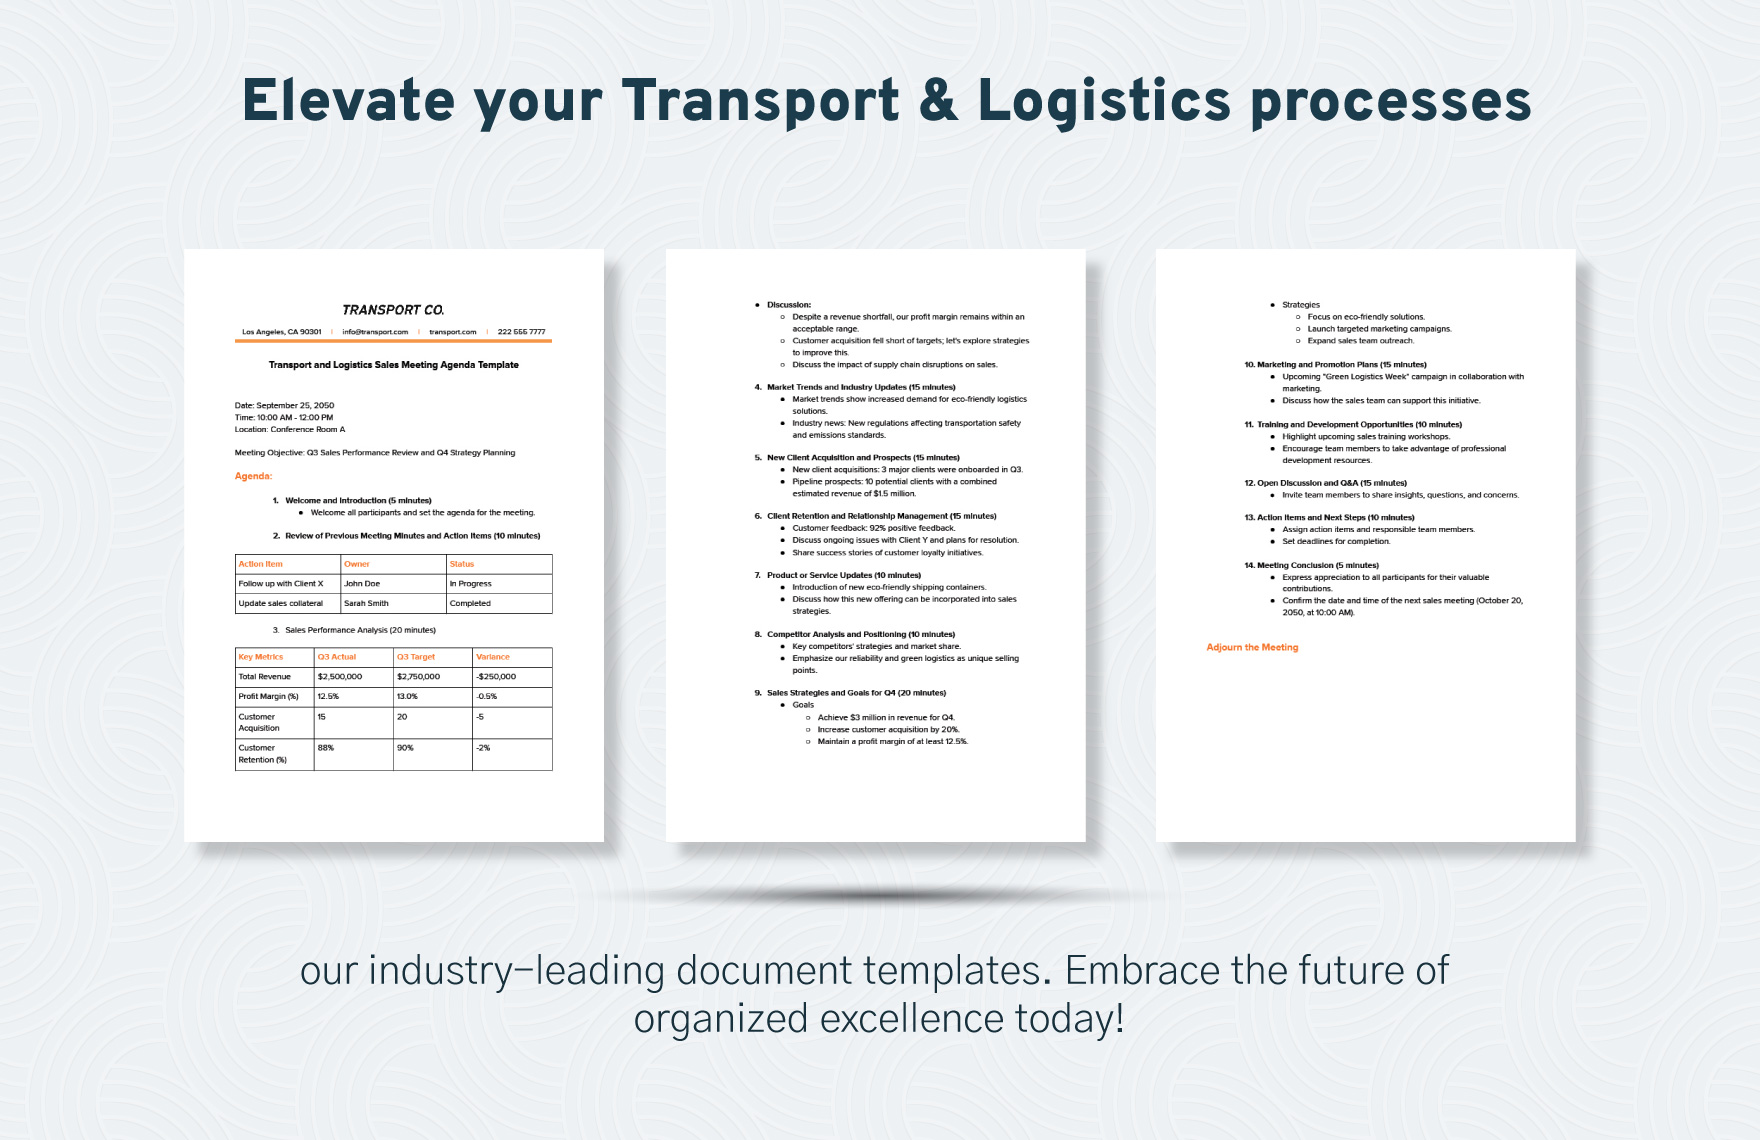 Transport and Logistics Sales Meeting Agenda Template